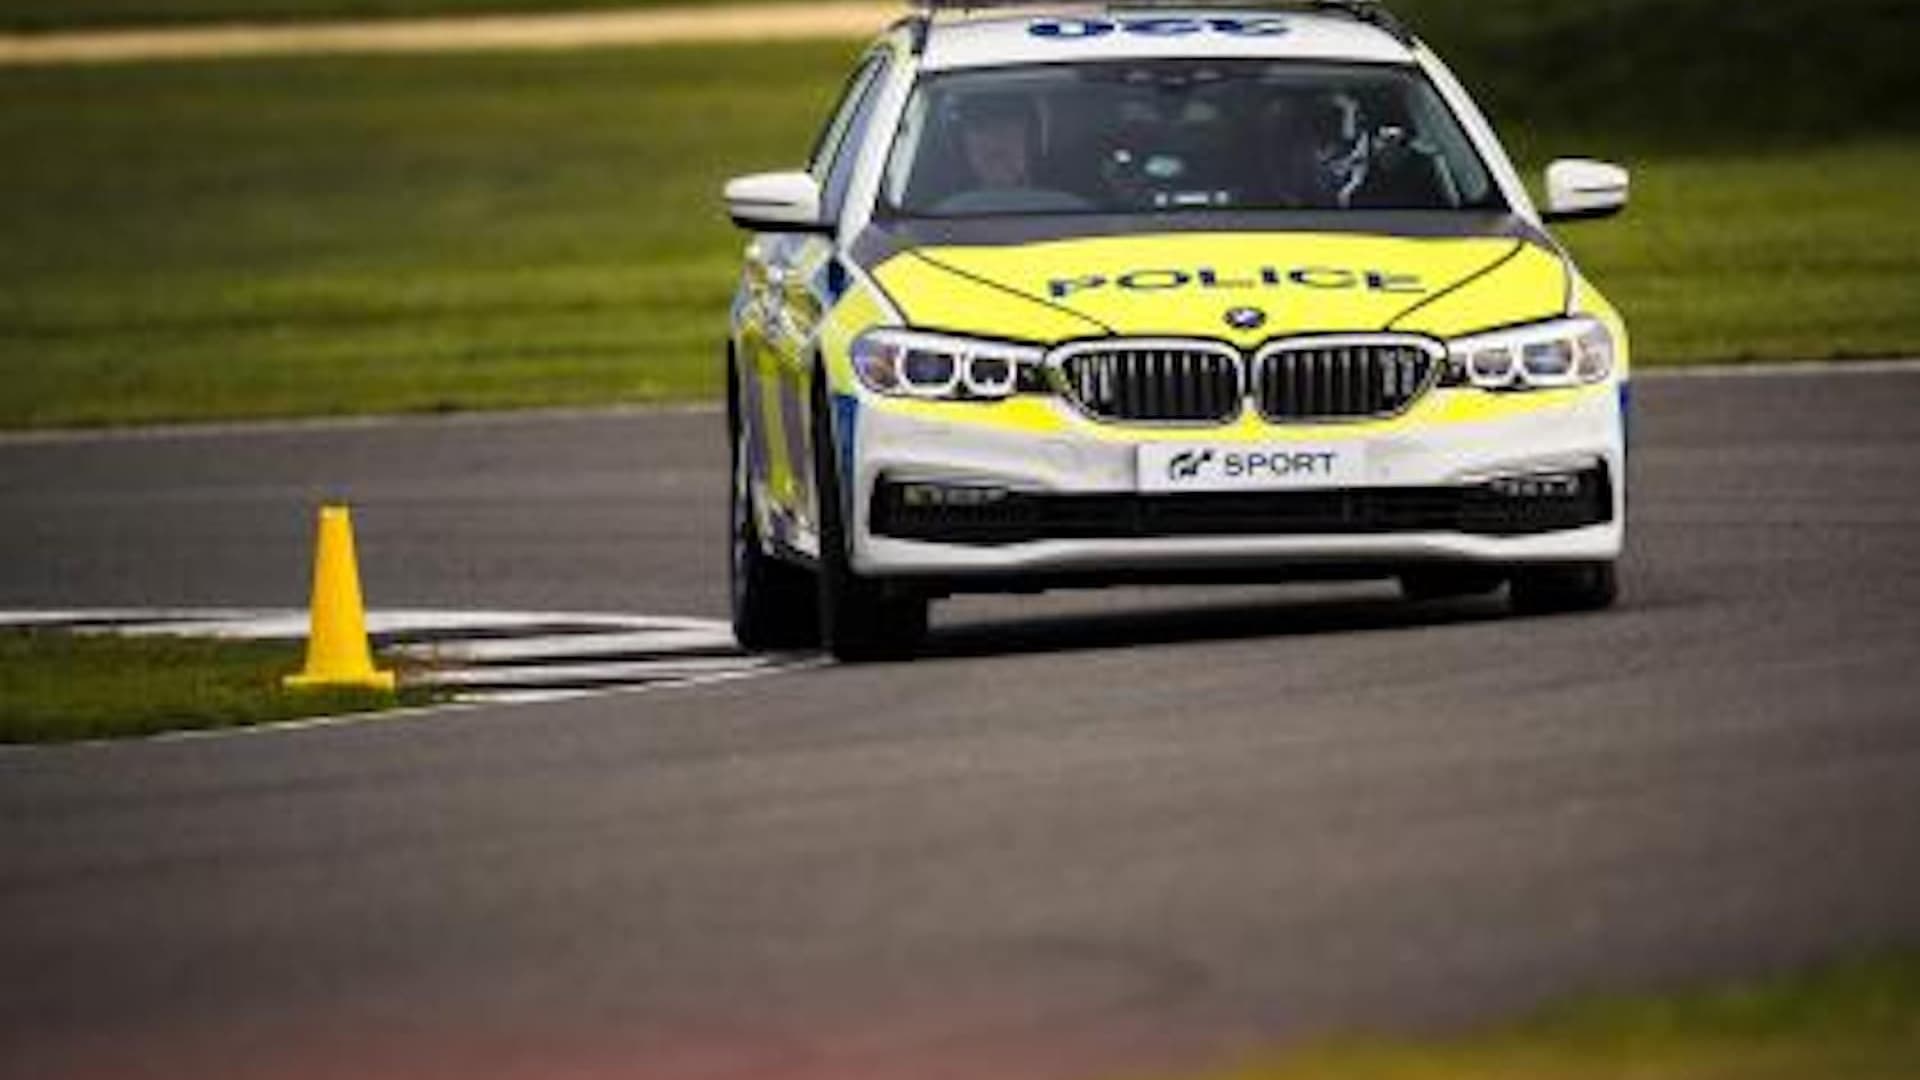 UK police use "Gran Turismo Sport" for training